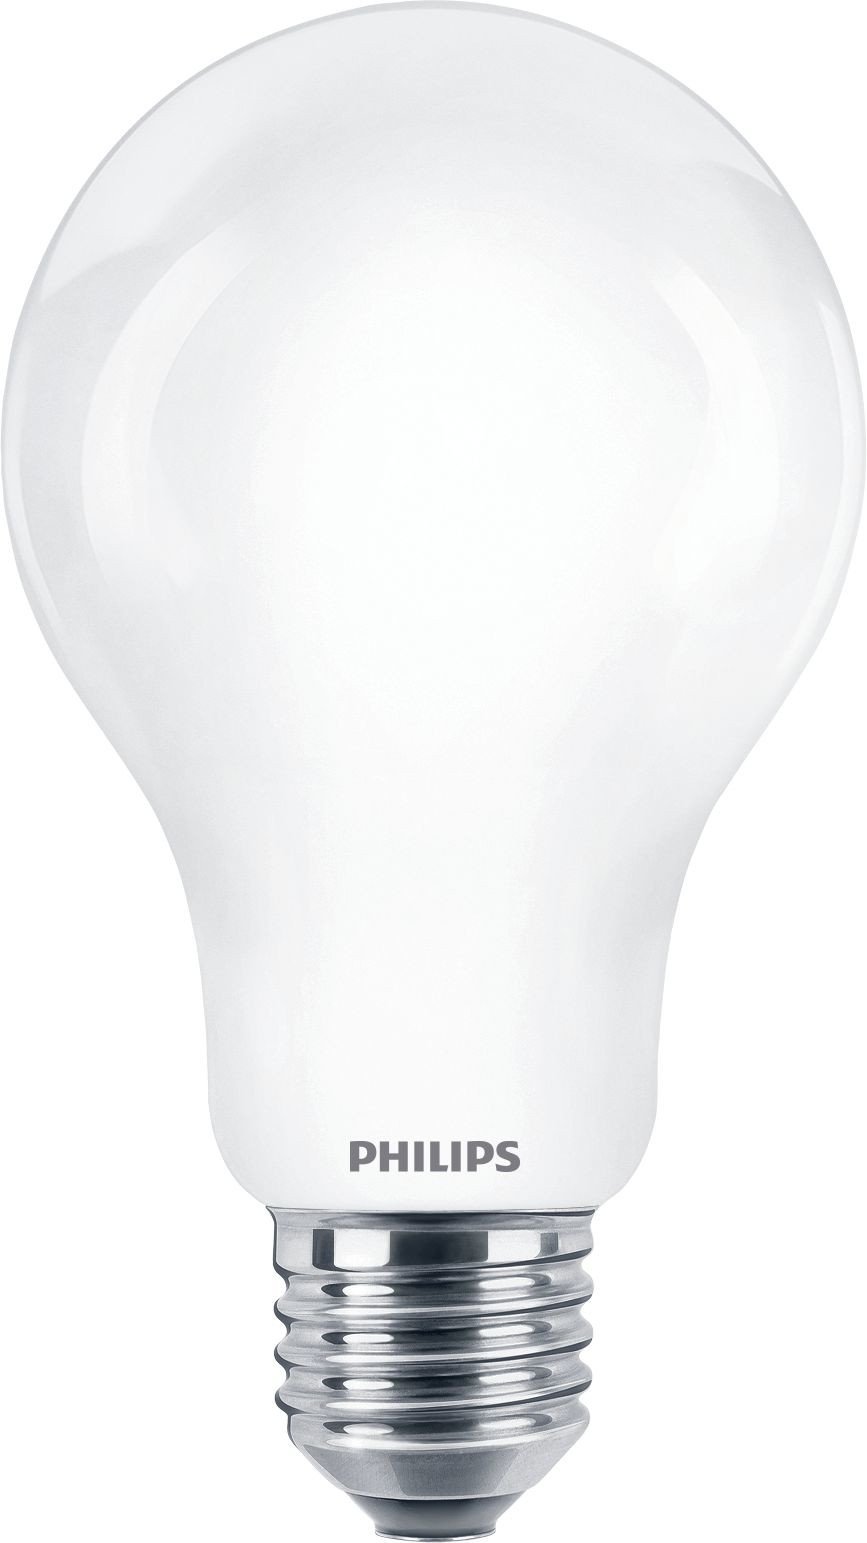 Image of Philips lampadina led philips 8718699764593 bianco opaco Lampadine Casa & cucina